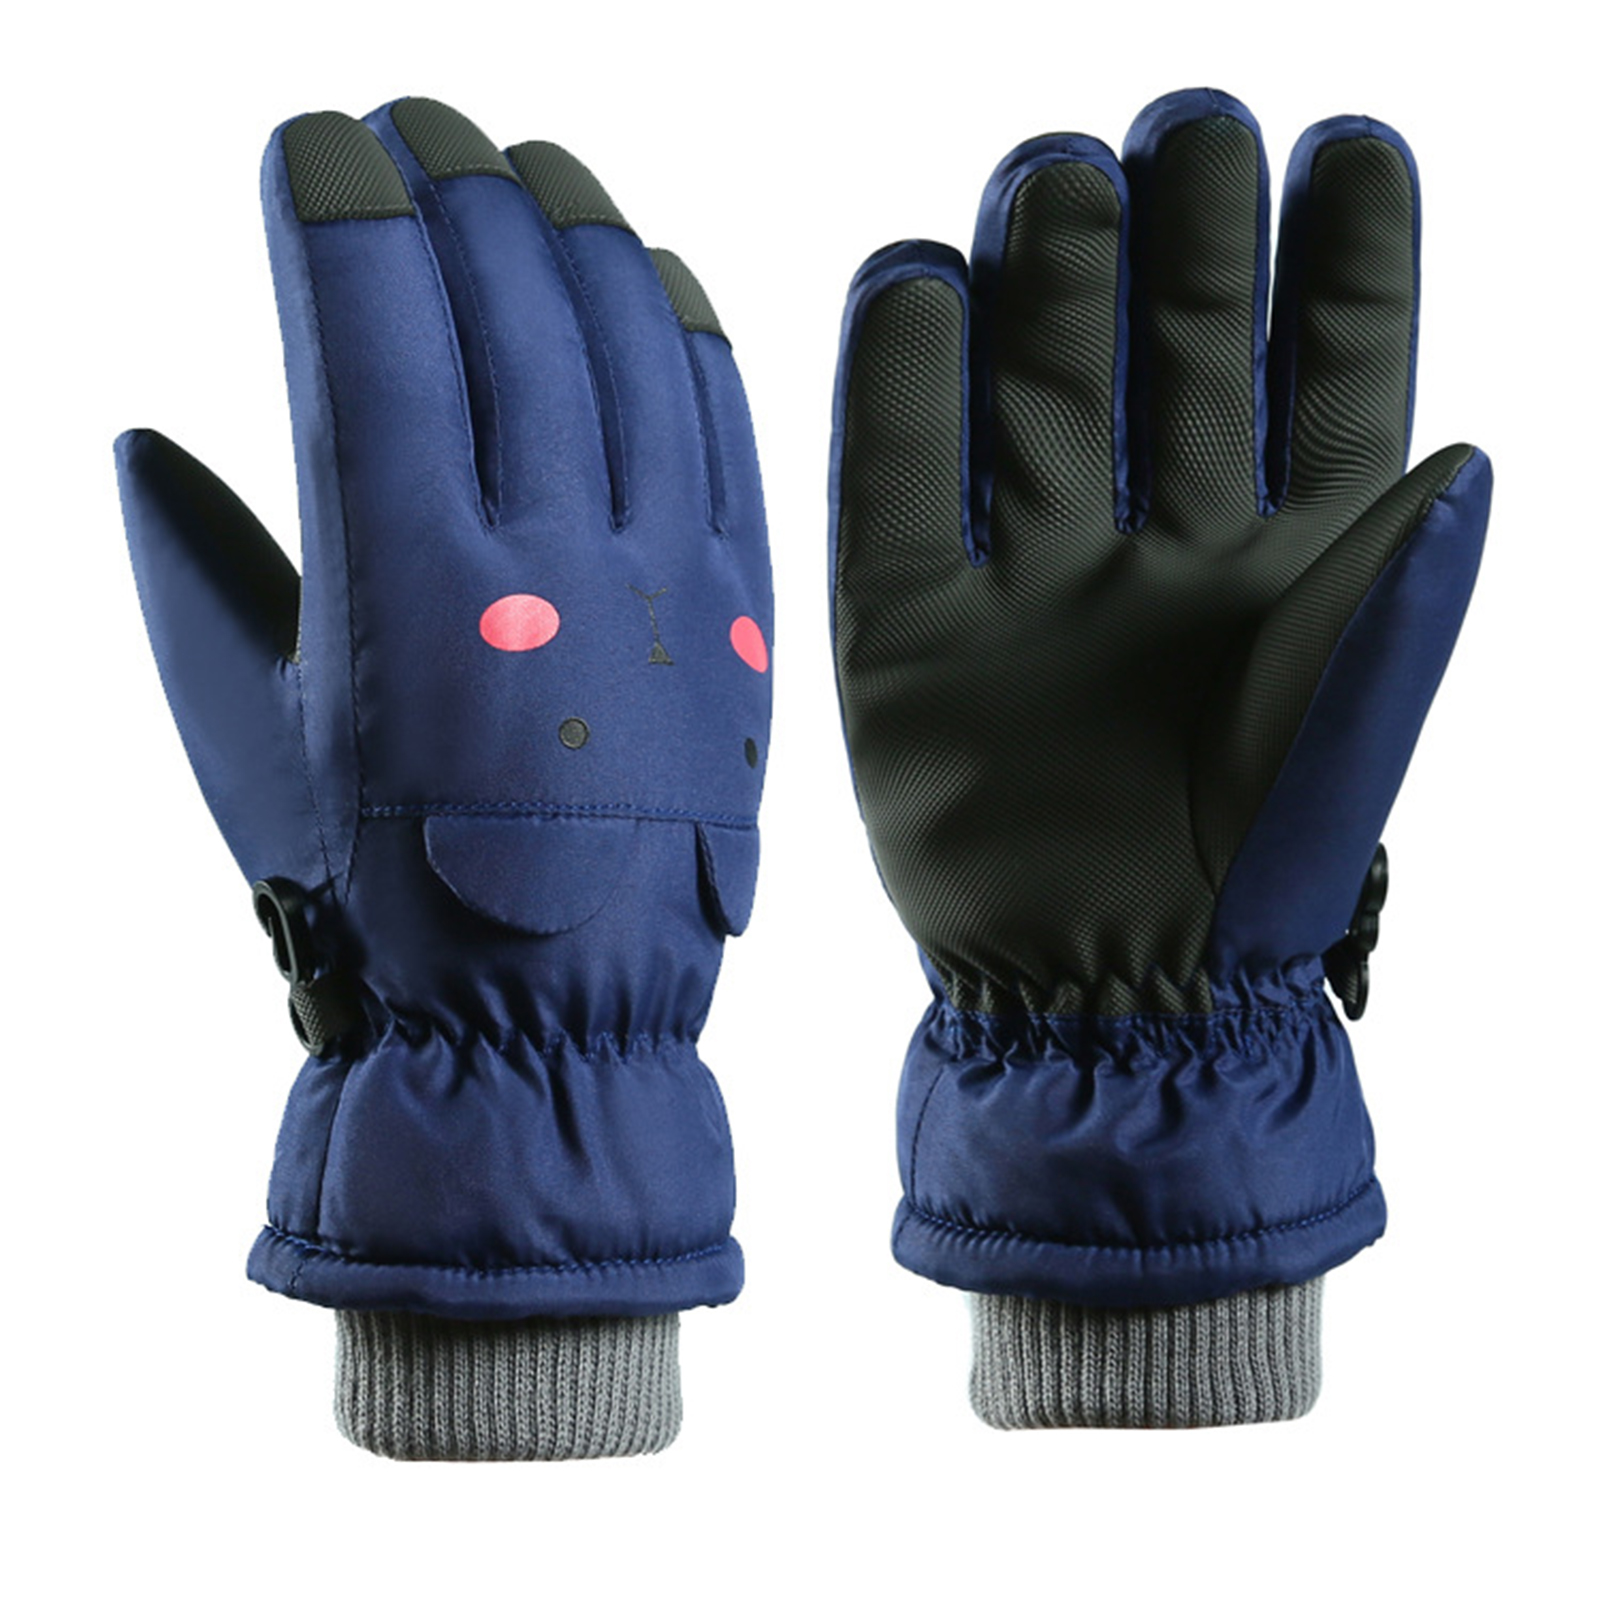 Kids Winter Snowboard Gloves Waterproof Windproof Plush Warm Gloves Snowboard Wear Outdoor Skiing Equipment